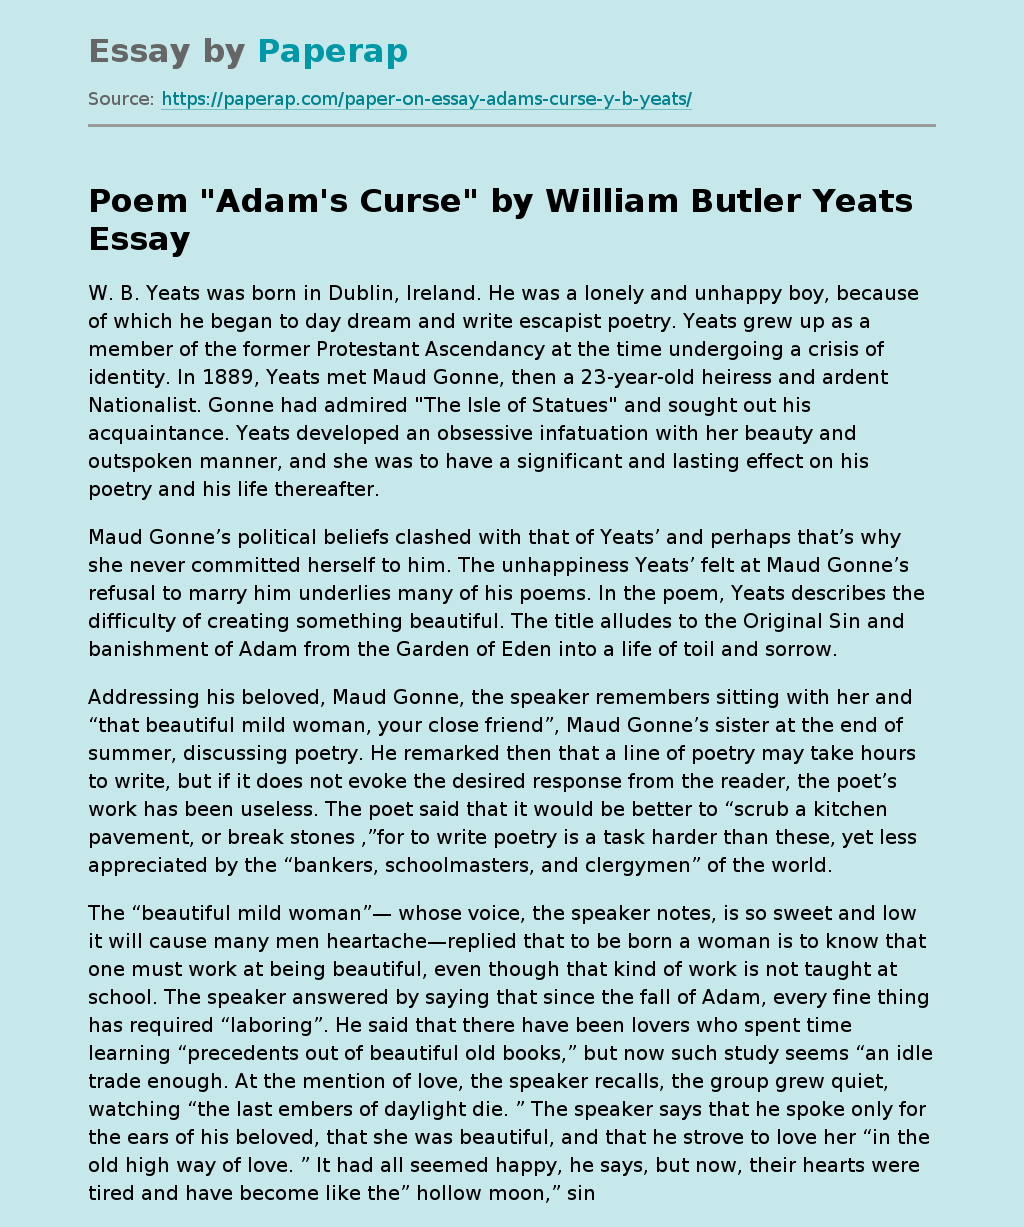 Poem "Adam's Curse" by William Butler Yeats